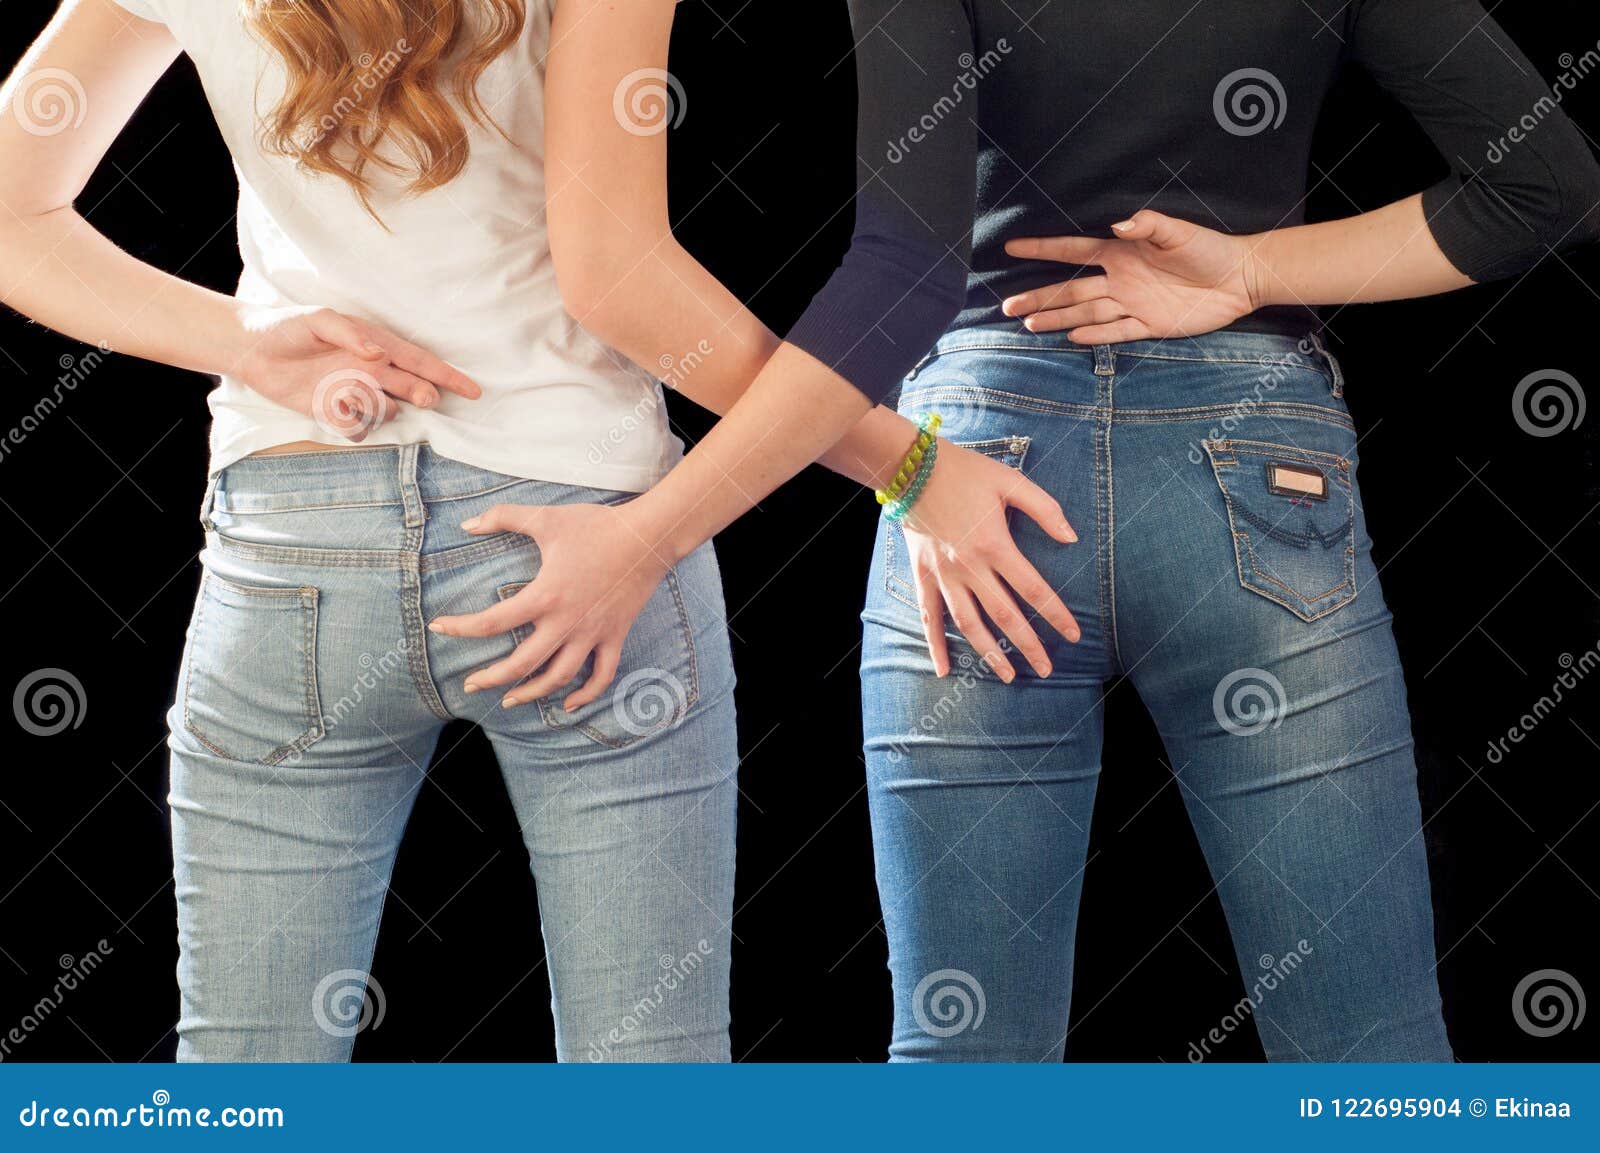 Lesbian Hand In Pants